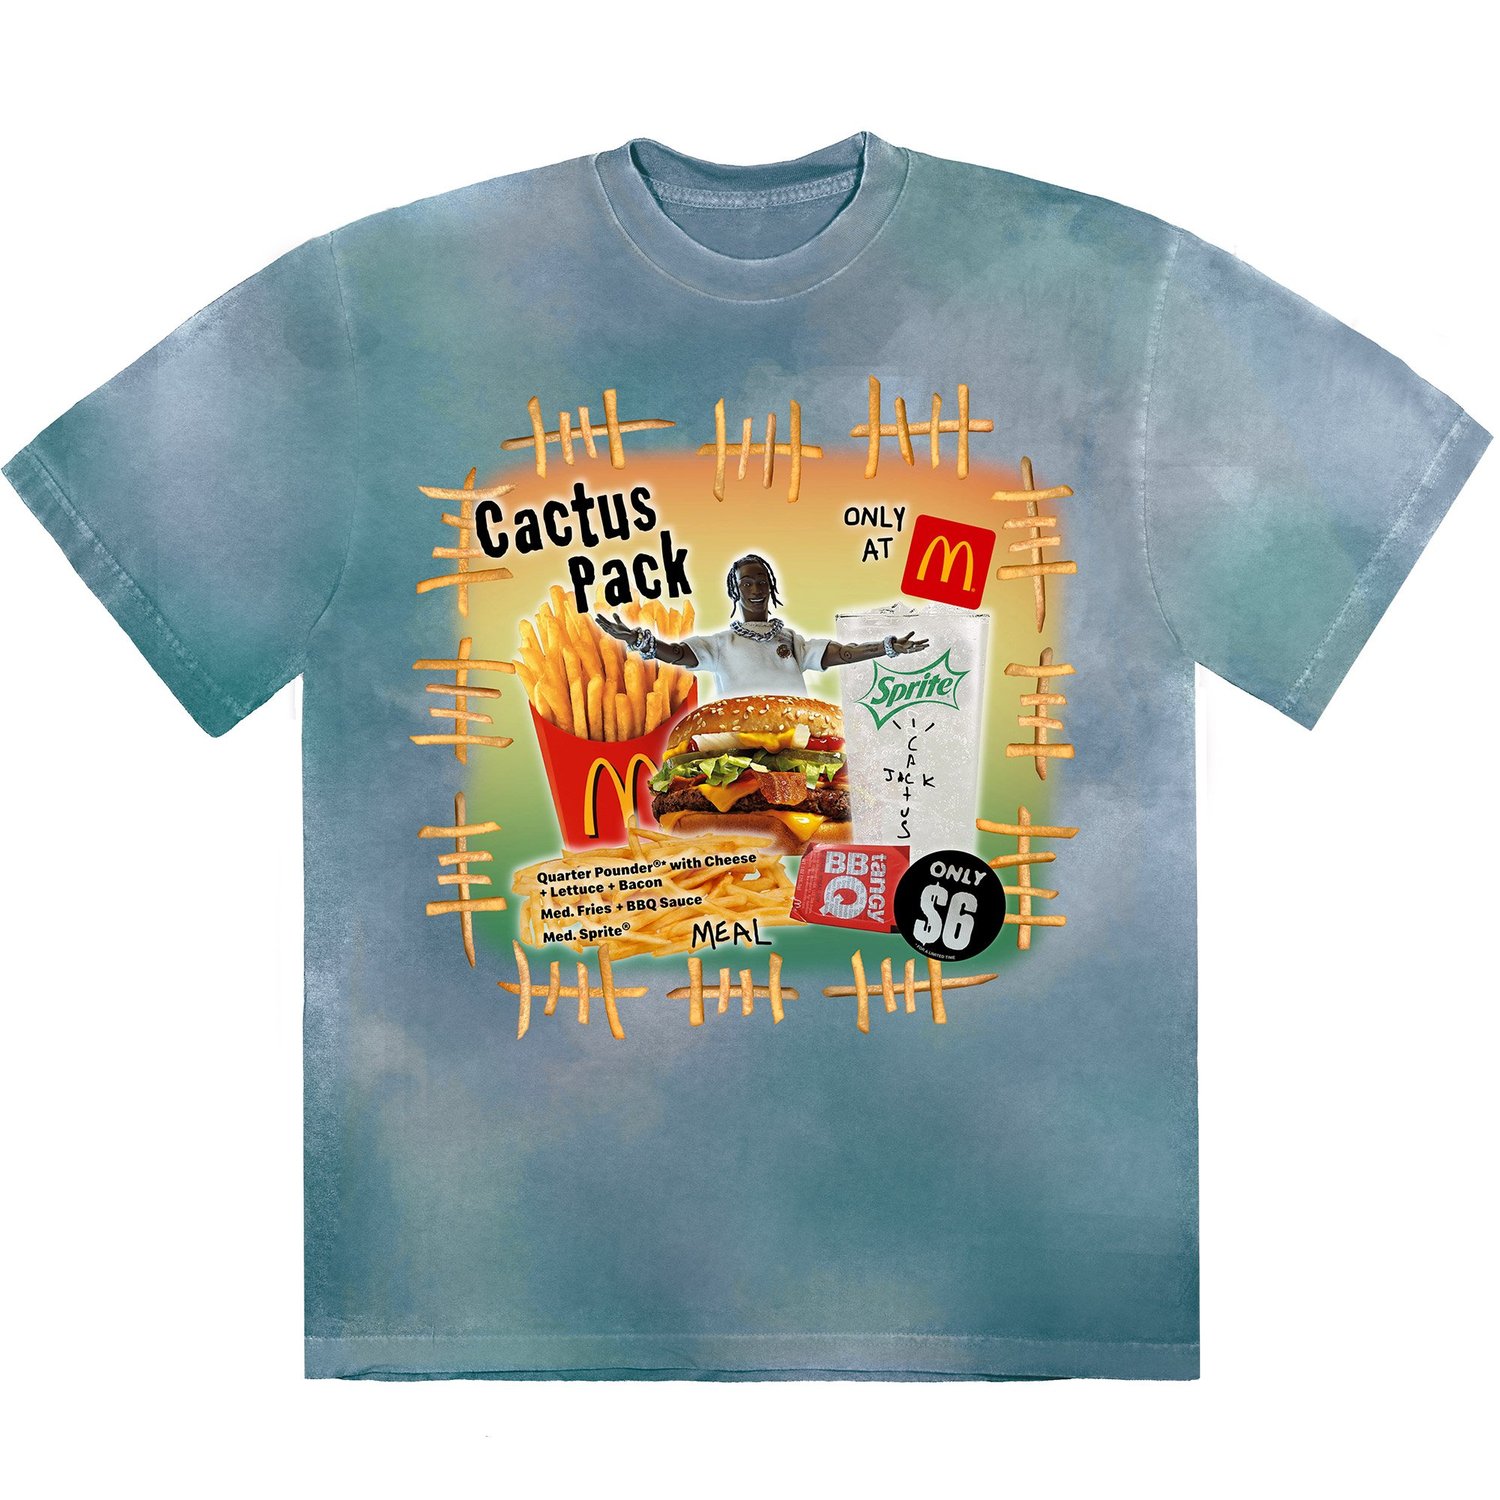 Travis Scott x McDonald's Cactus Pack Vintage Bootleg T-Shirt 